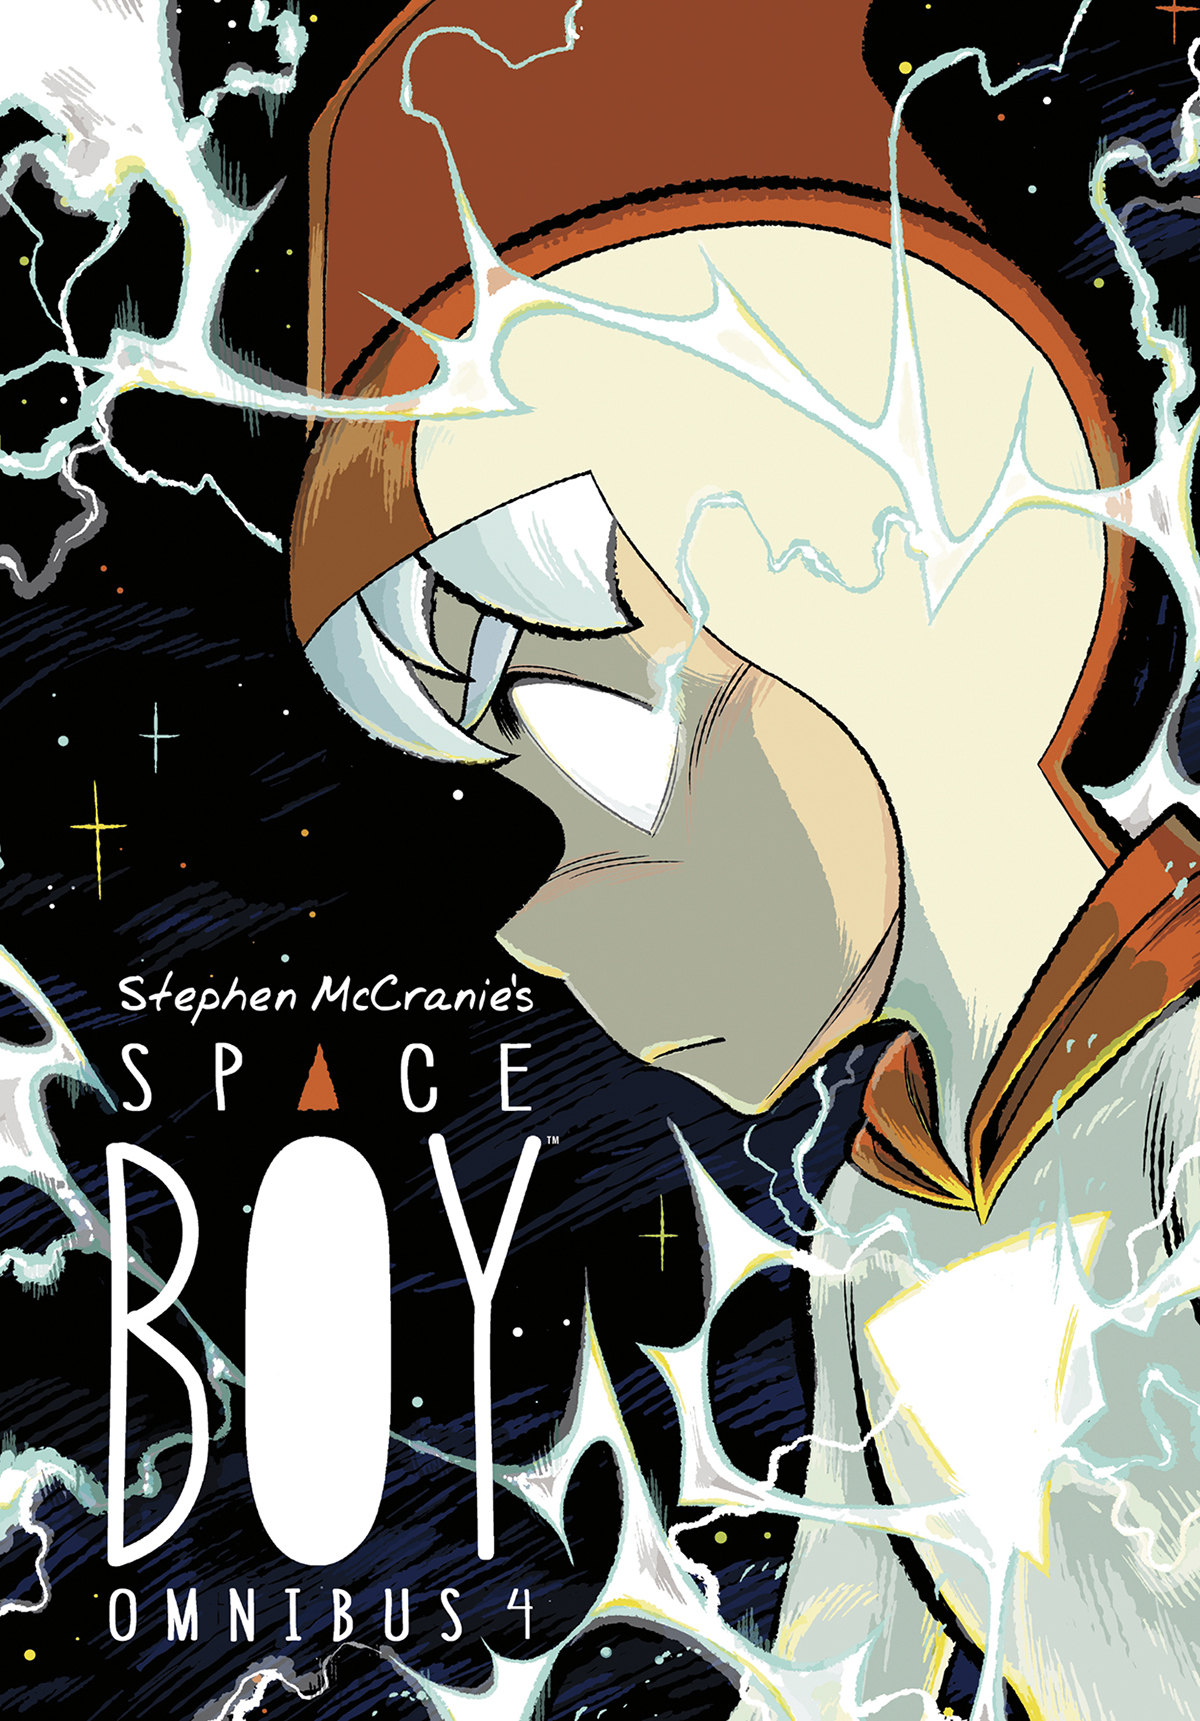 Stephen McCranie's Space Boy Omnibus Graphic Novel Volume 4